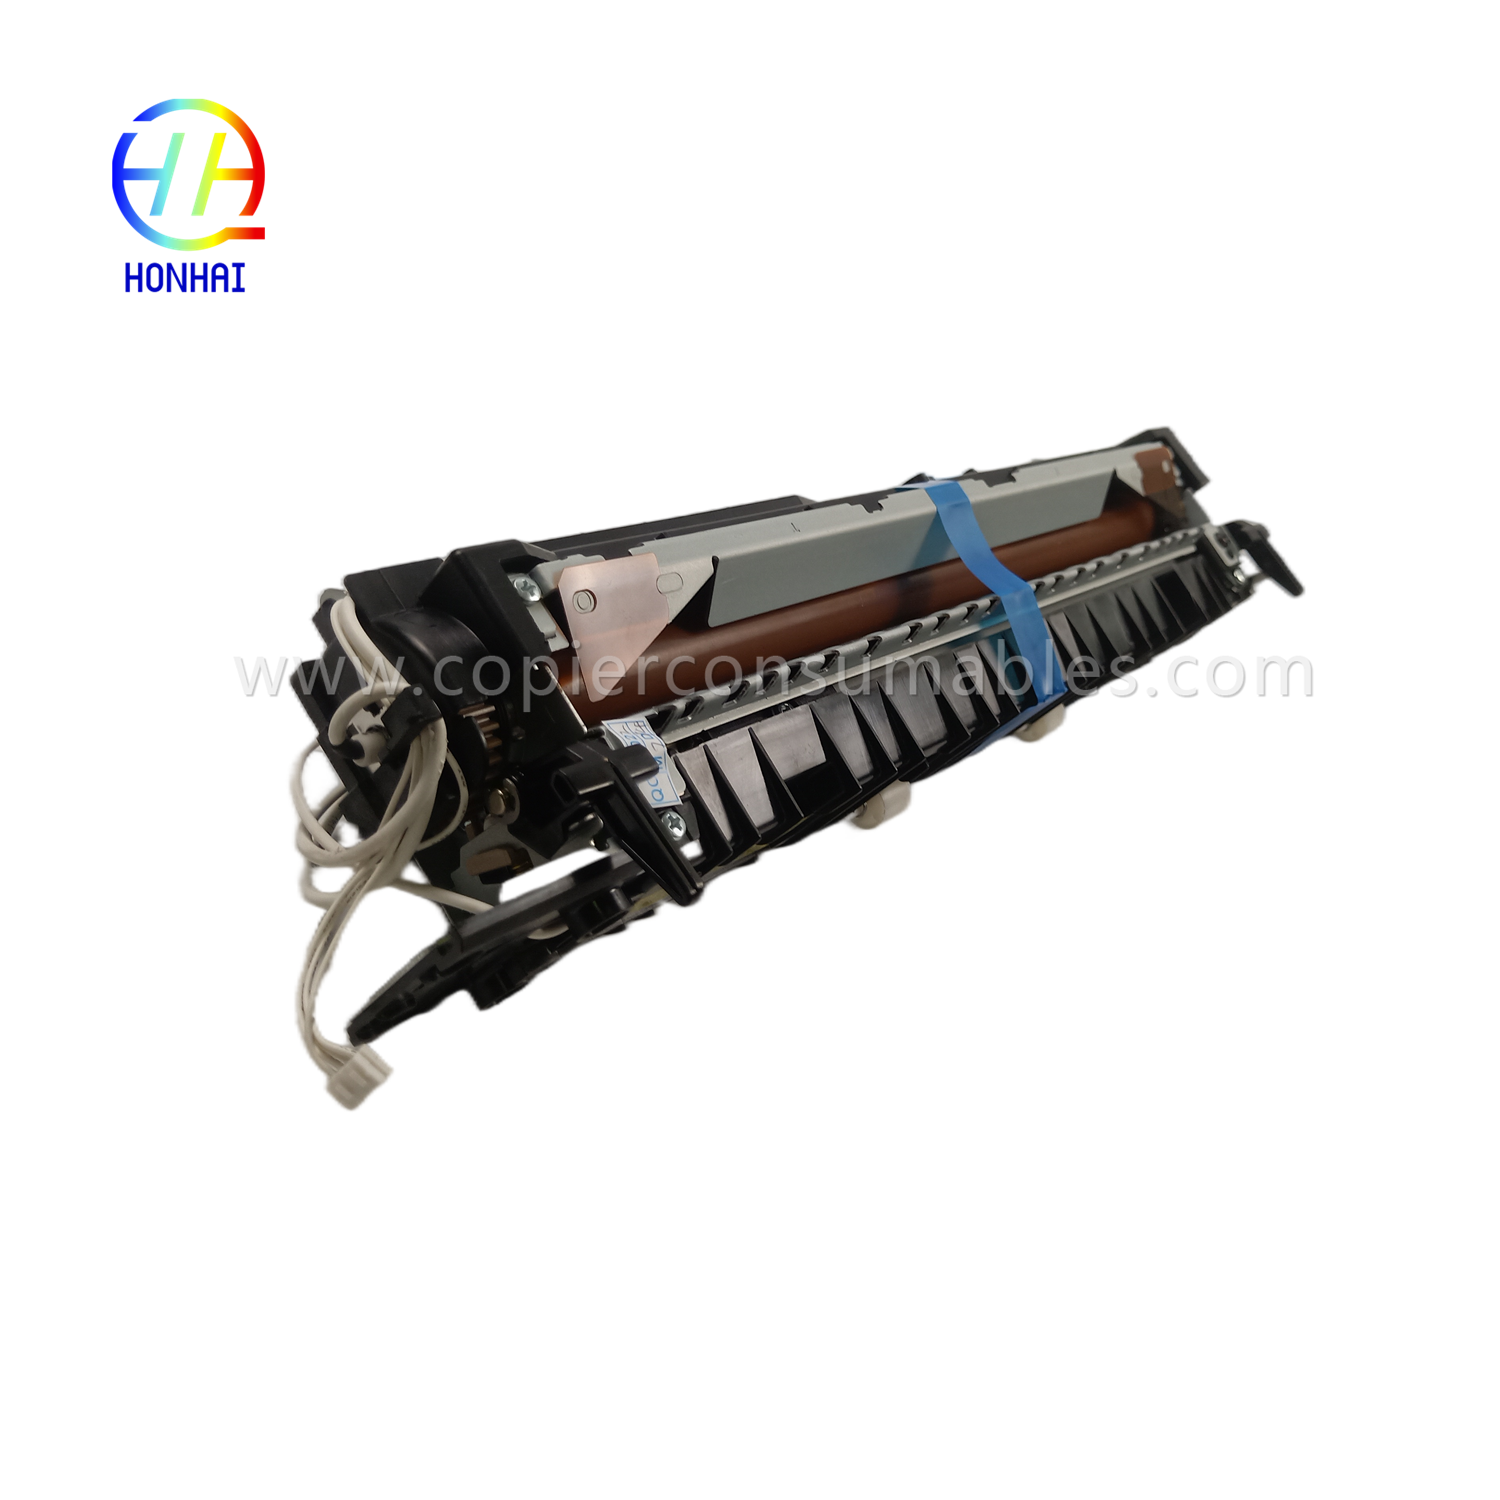 https://www.copierconsumables.com/fuser-unit-for-samsung-jc91-01163a-4250-4350-k4250-k4350-k4250rx-k4350lx-k4250lx-fuser-assembly-product/